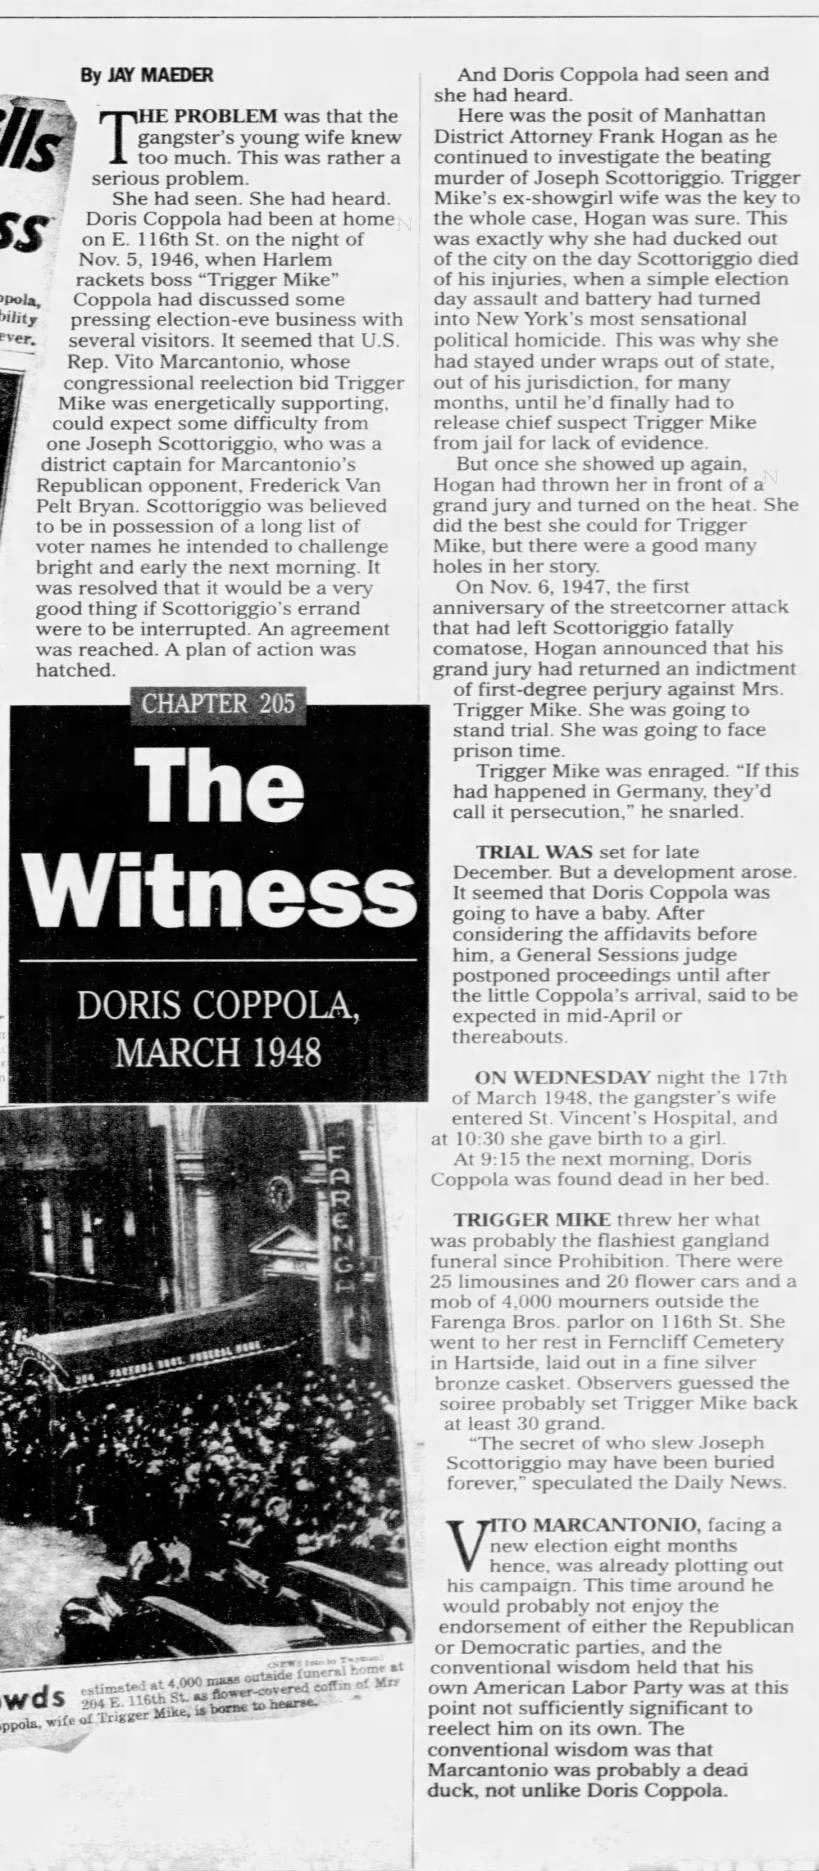 The Witness: Doris Coppola, March 1948